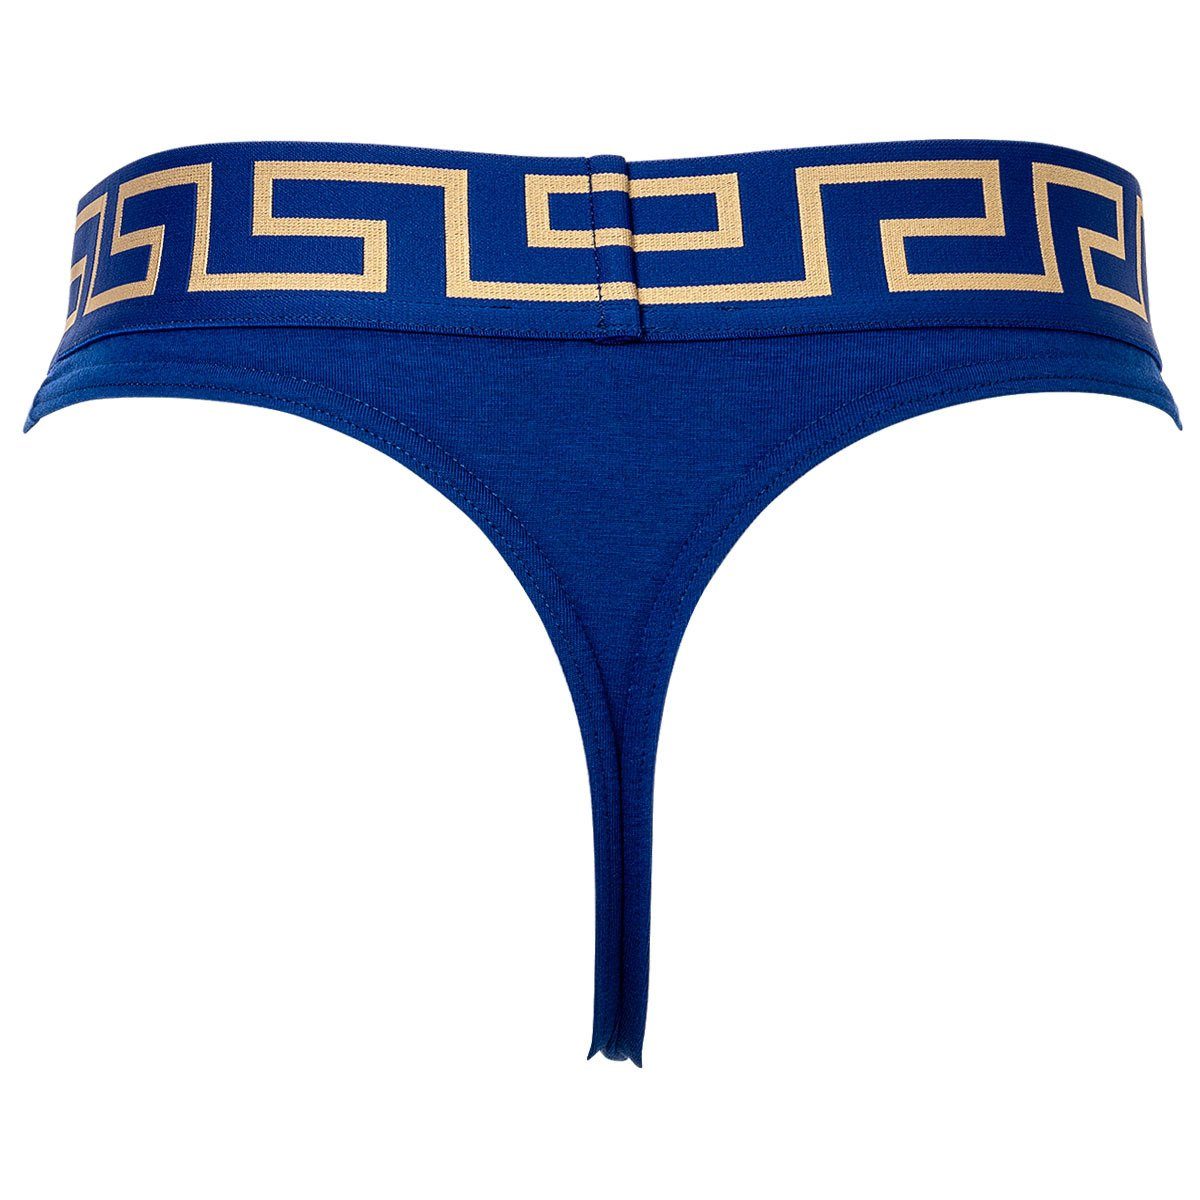 Tanga String, Herren Versace Blau/Gold Tanga Stretch - Slip, Thong, Cotton